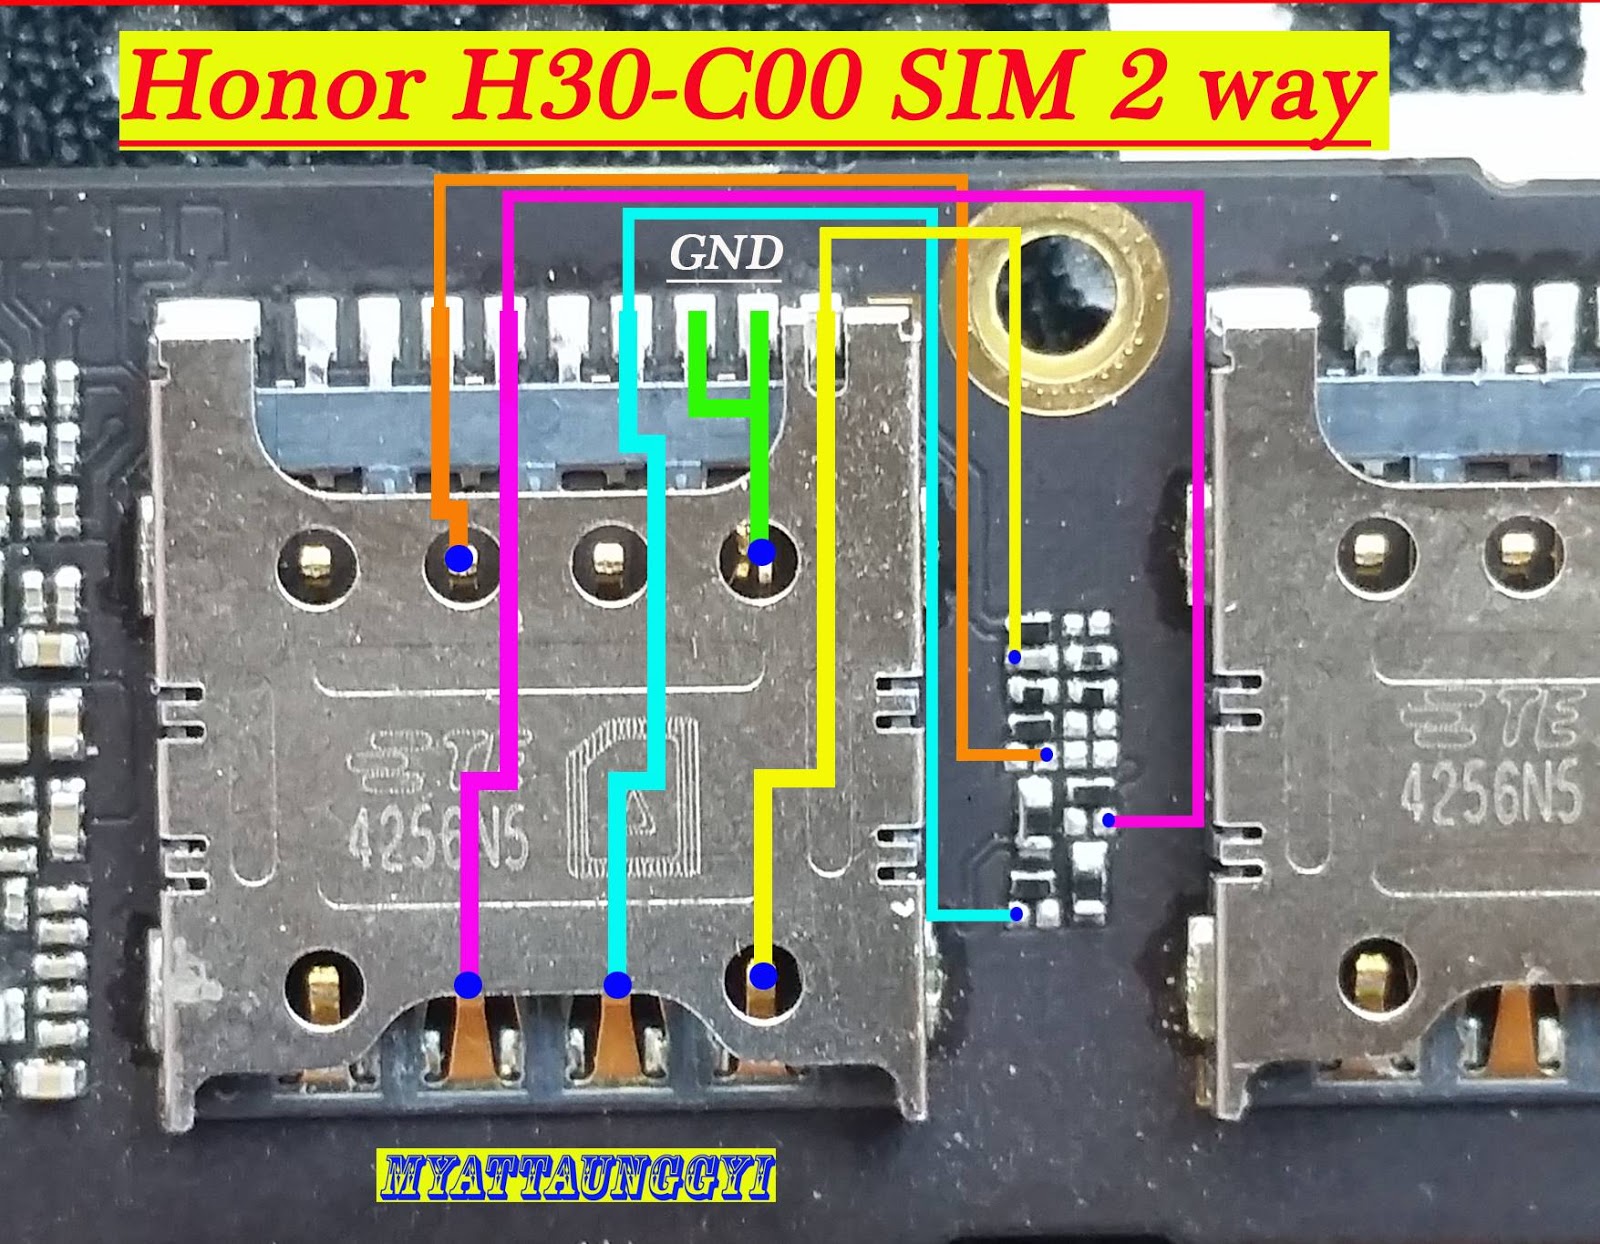 Honor H30